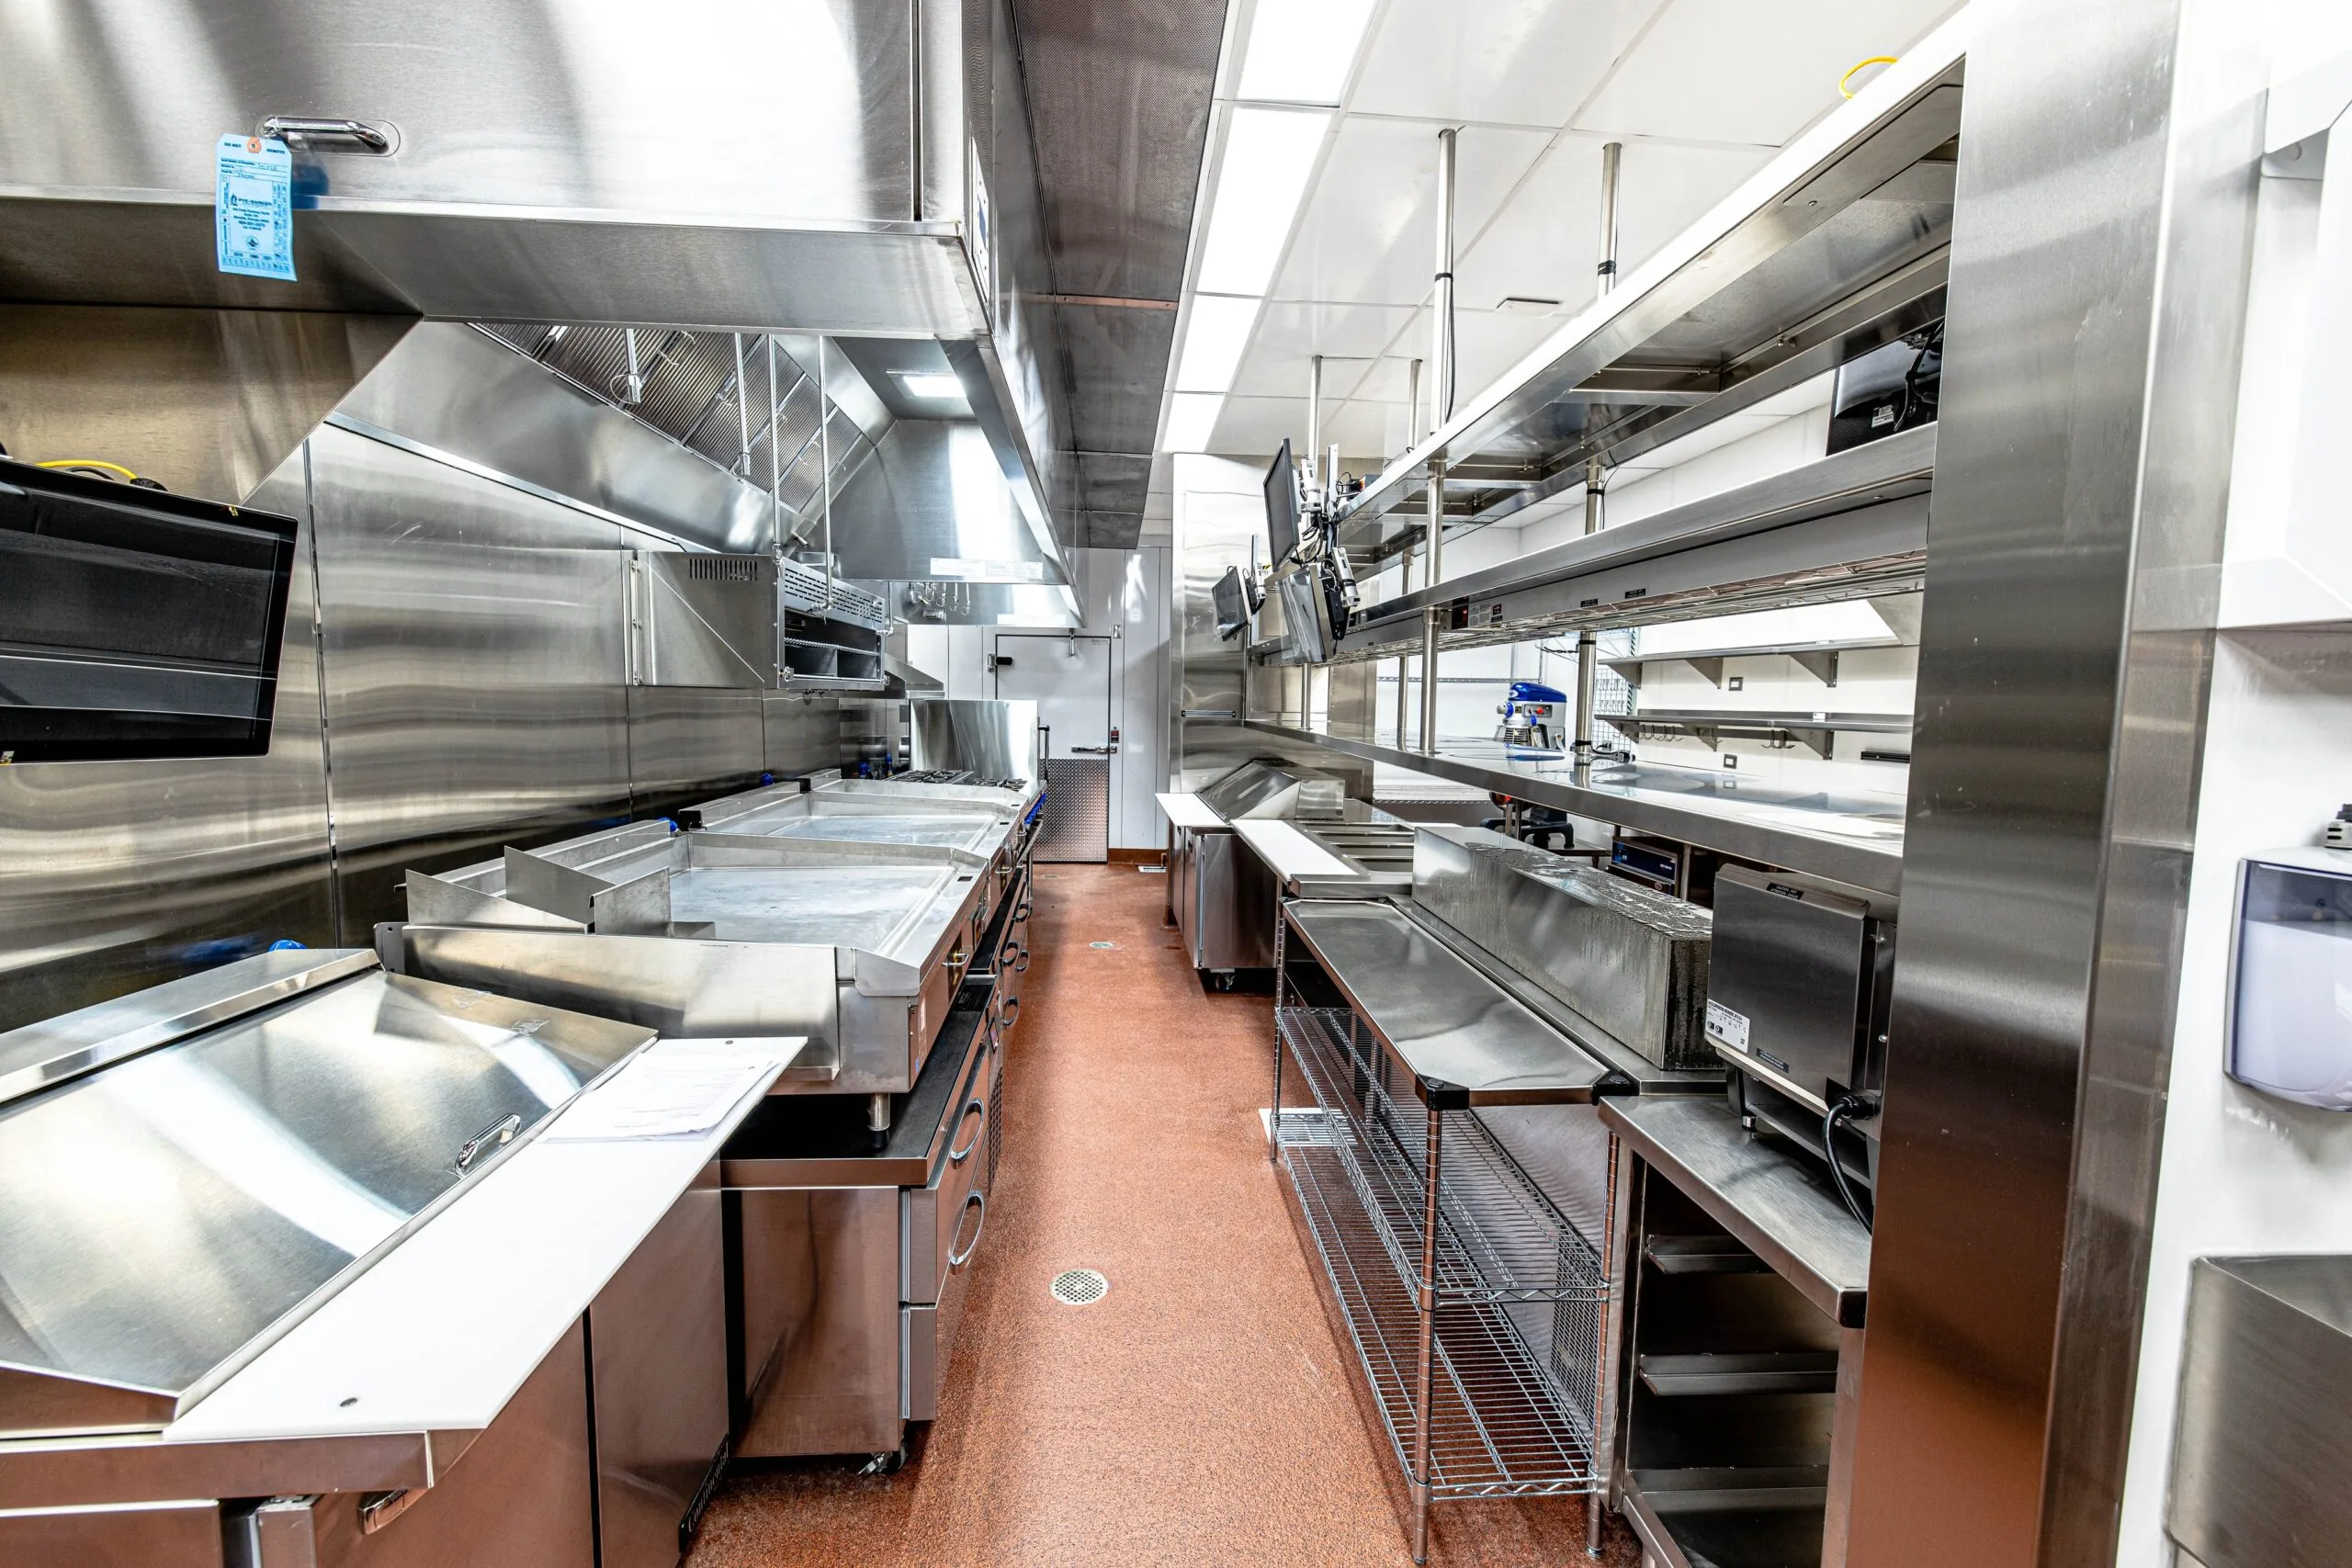 What is restaurant commercial kitchen equipment?